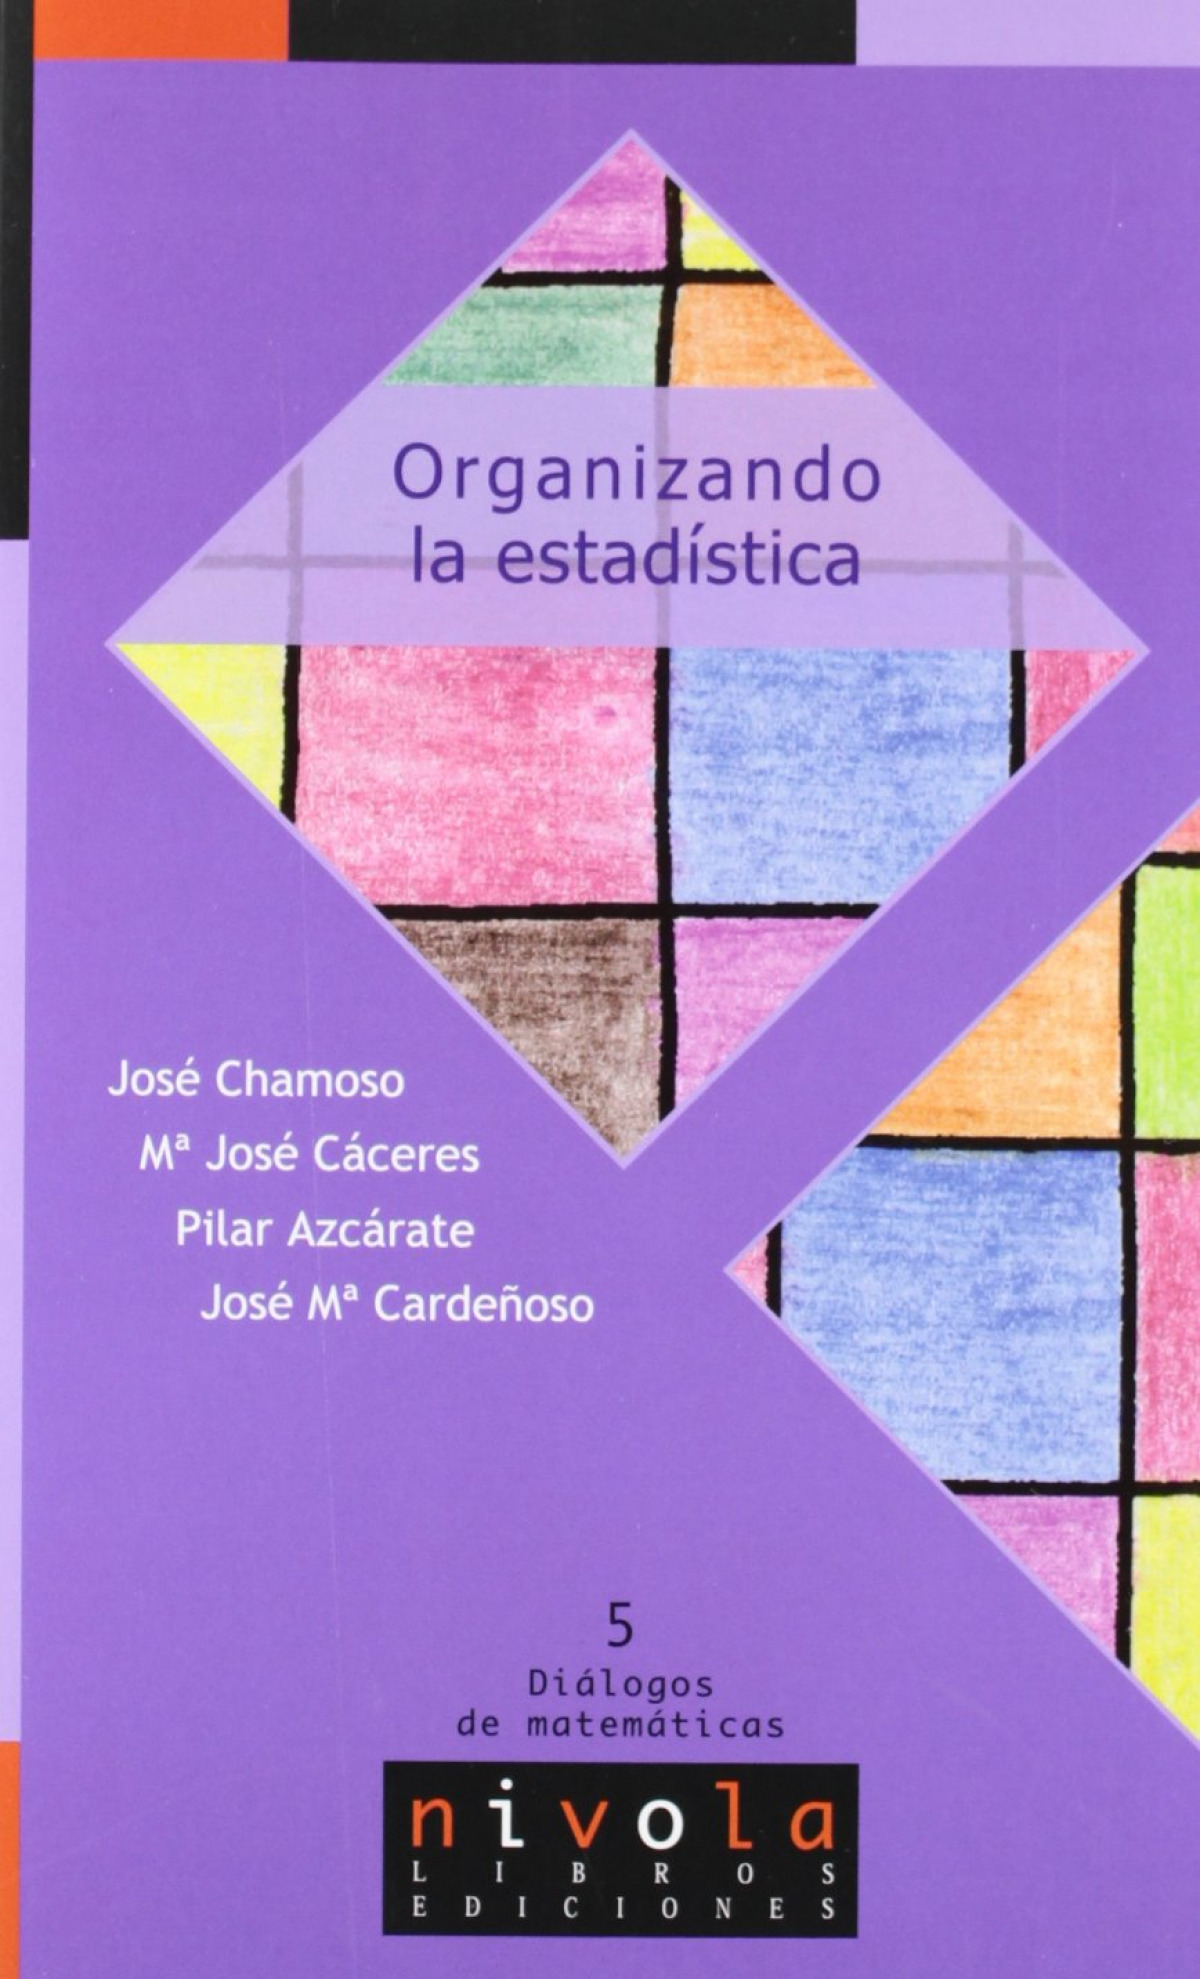 Organizando la estadística - Chamoso, M. J. Cáceres, P. Azcárate y J. M. Cardeñoso, J.